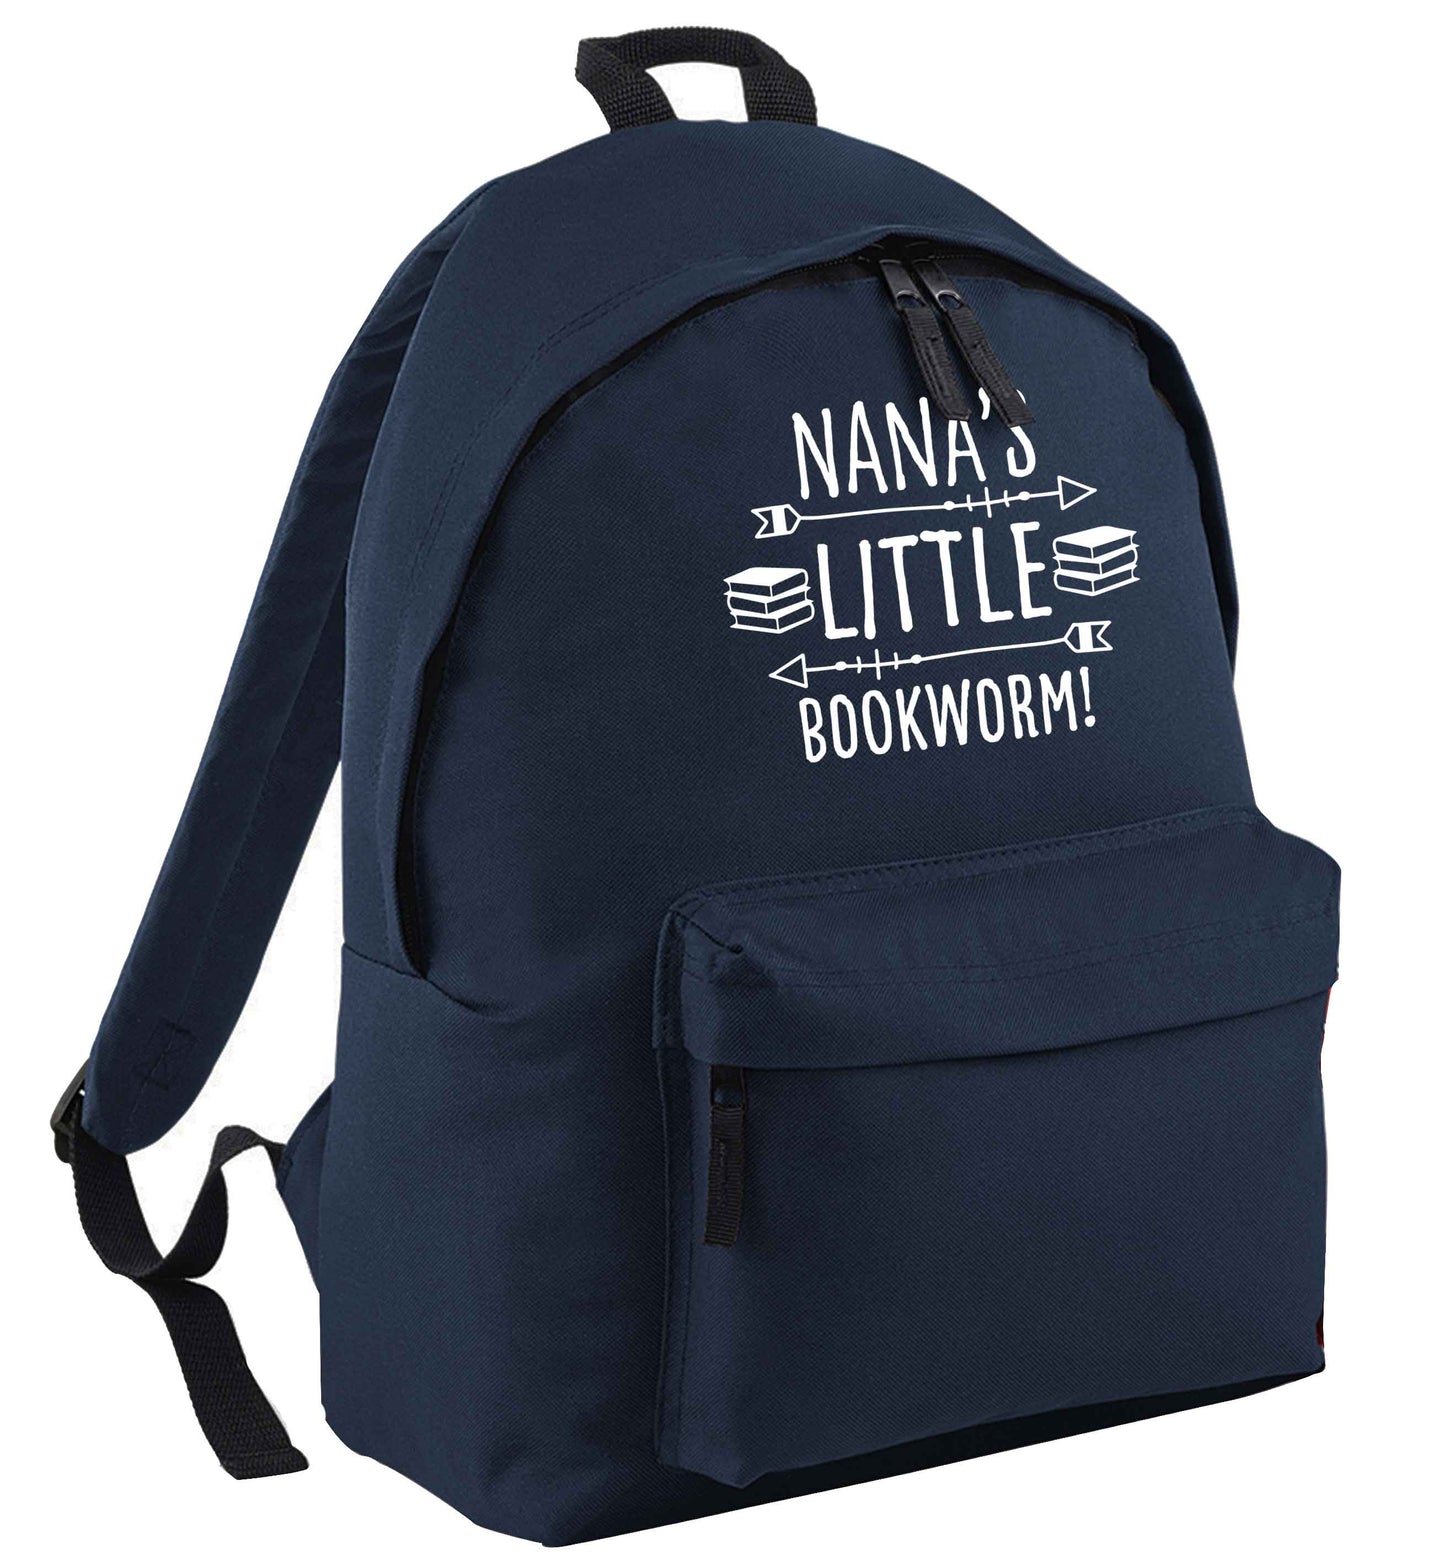 Nana's little bookworm | Children's backpack